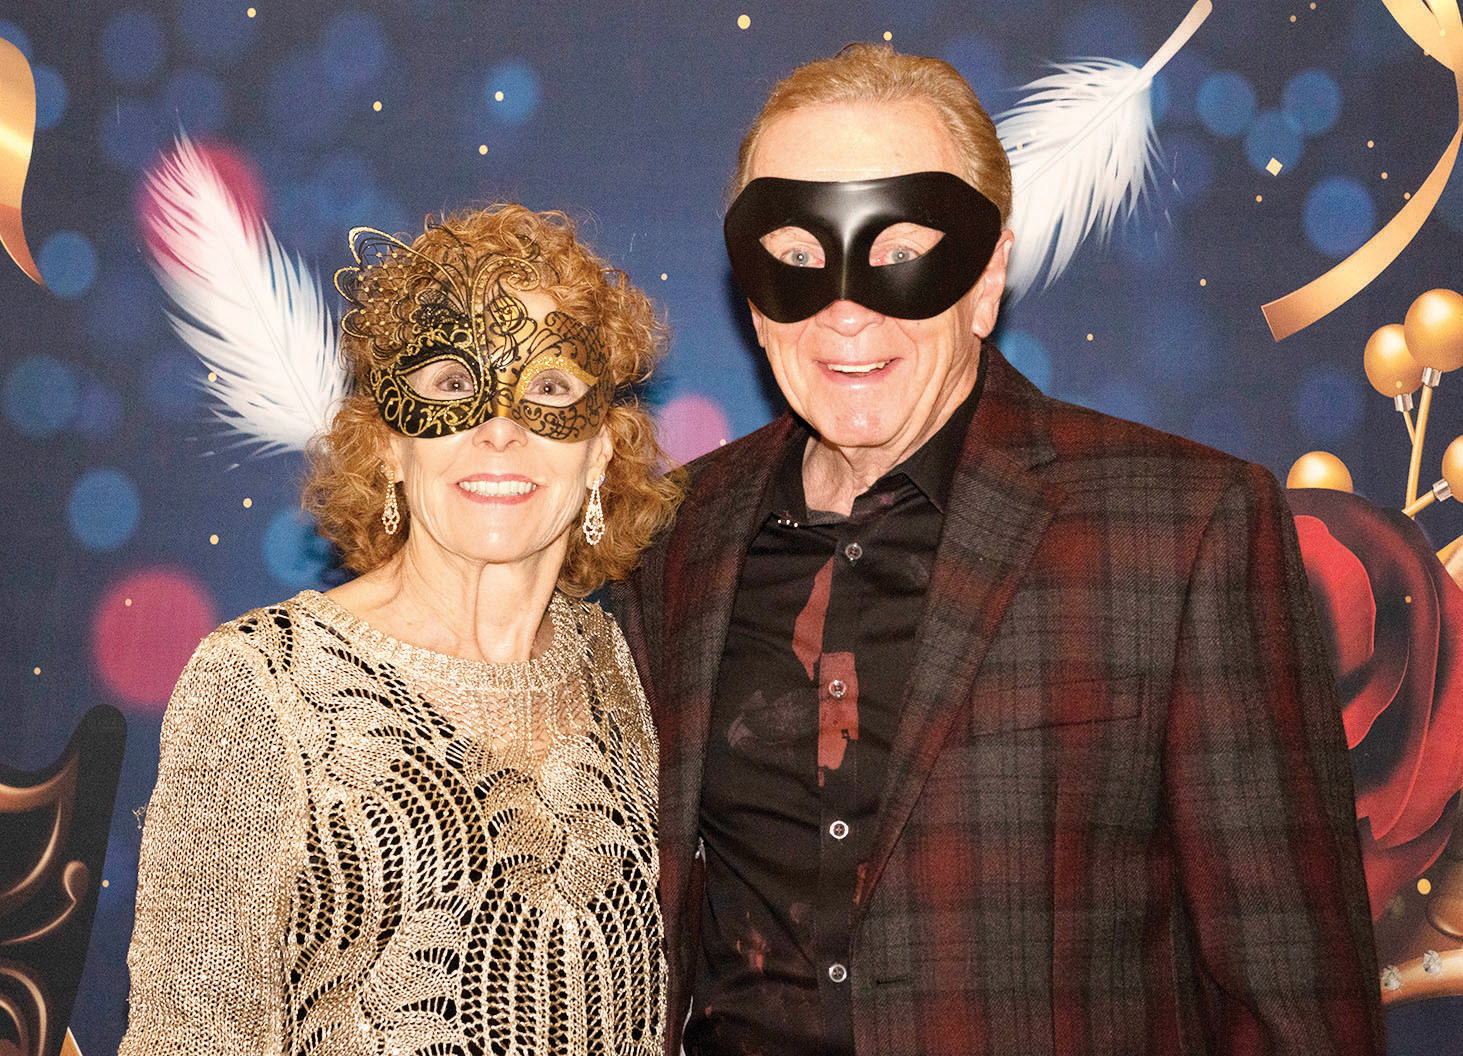 Bob Osborne and Wanda Ross at last year’s Masquerade Ball (Photo by Sheila Honey)